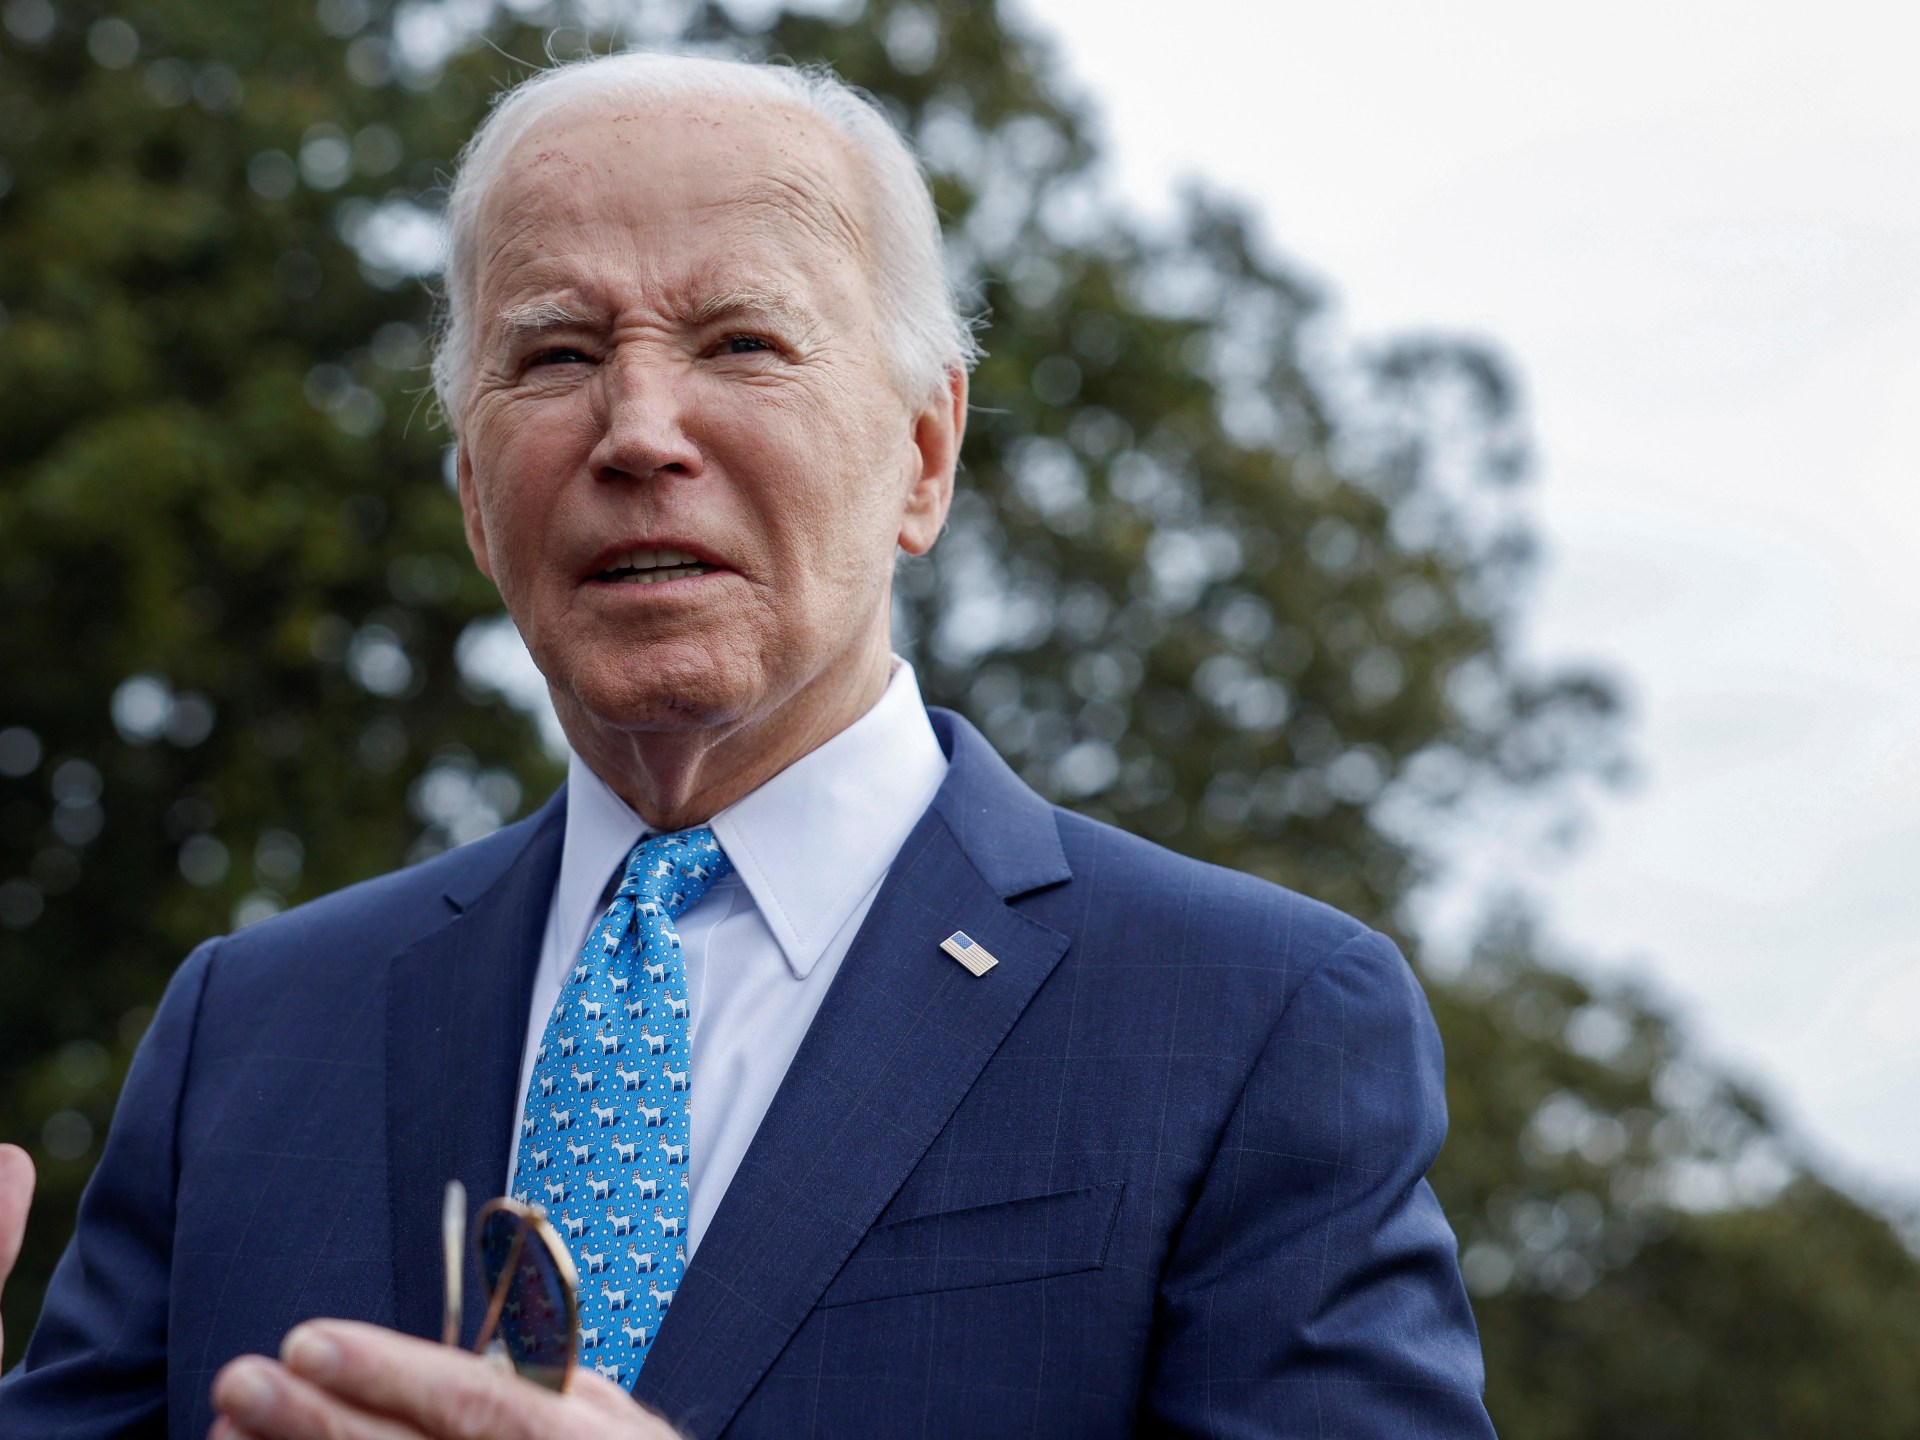 Biden says he has decided Jordan strike response, doesn’t want wider war | News